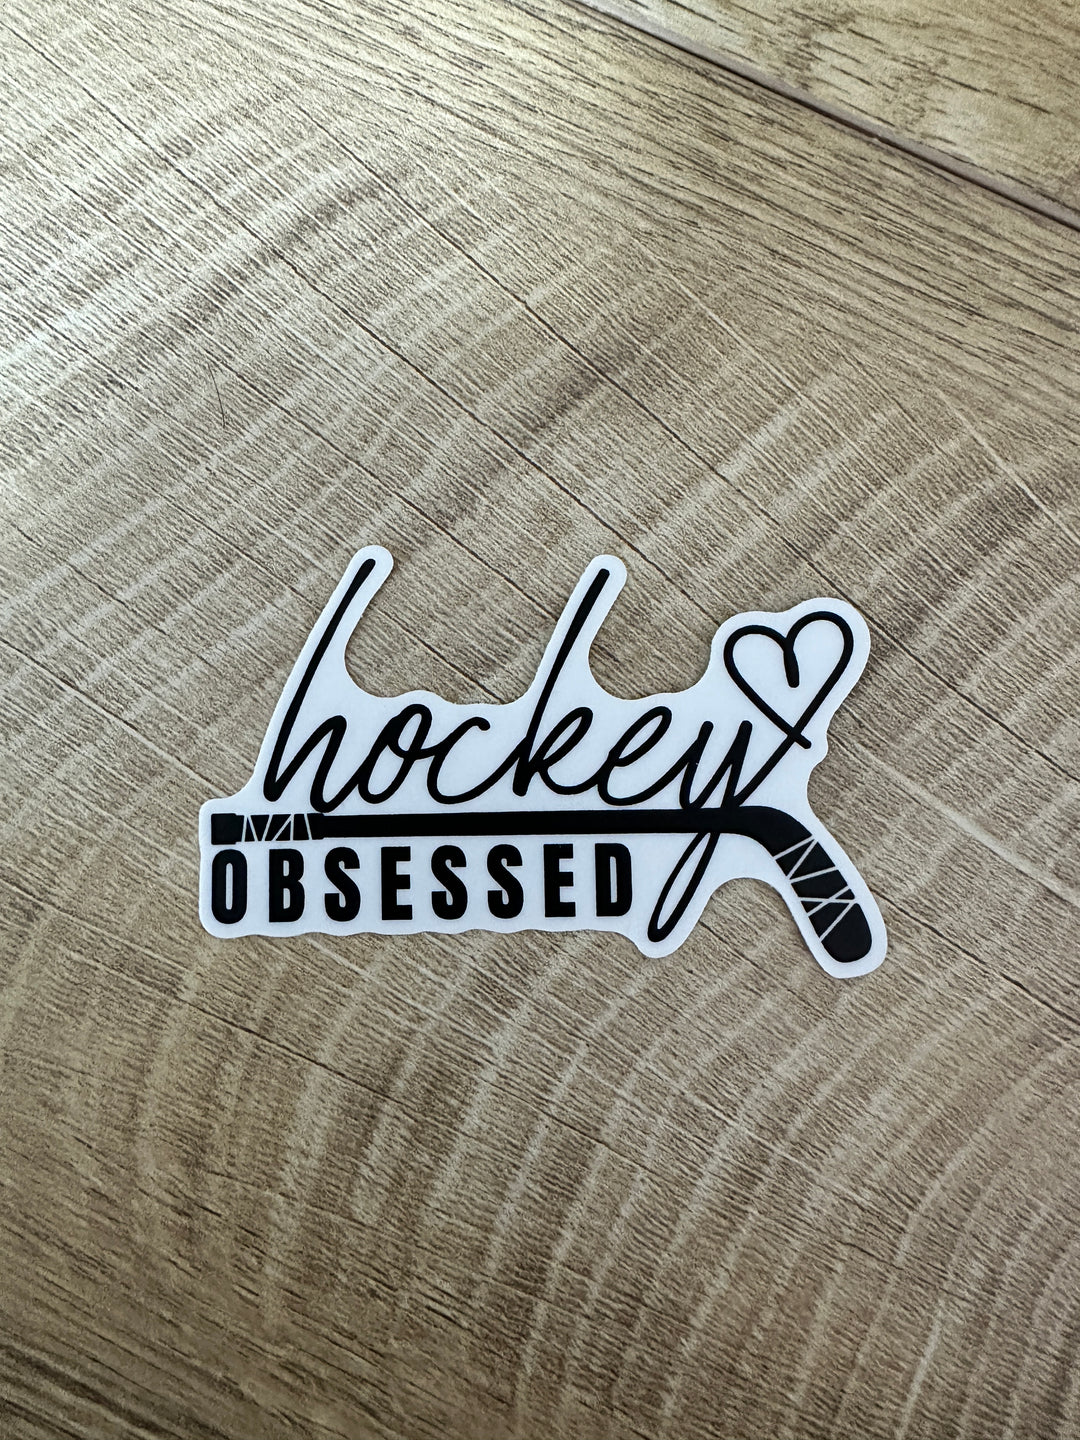 S. Massery- Hockey Obsessed Sticker